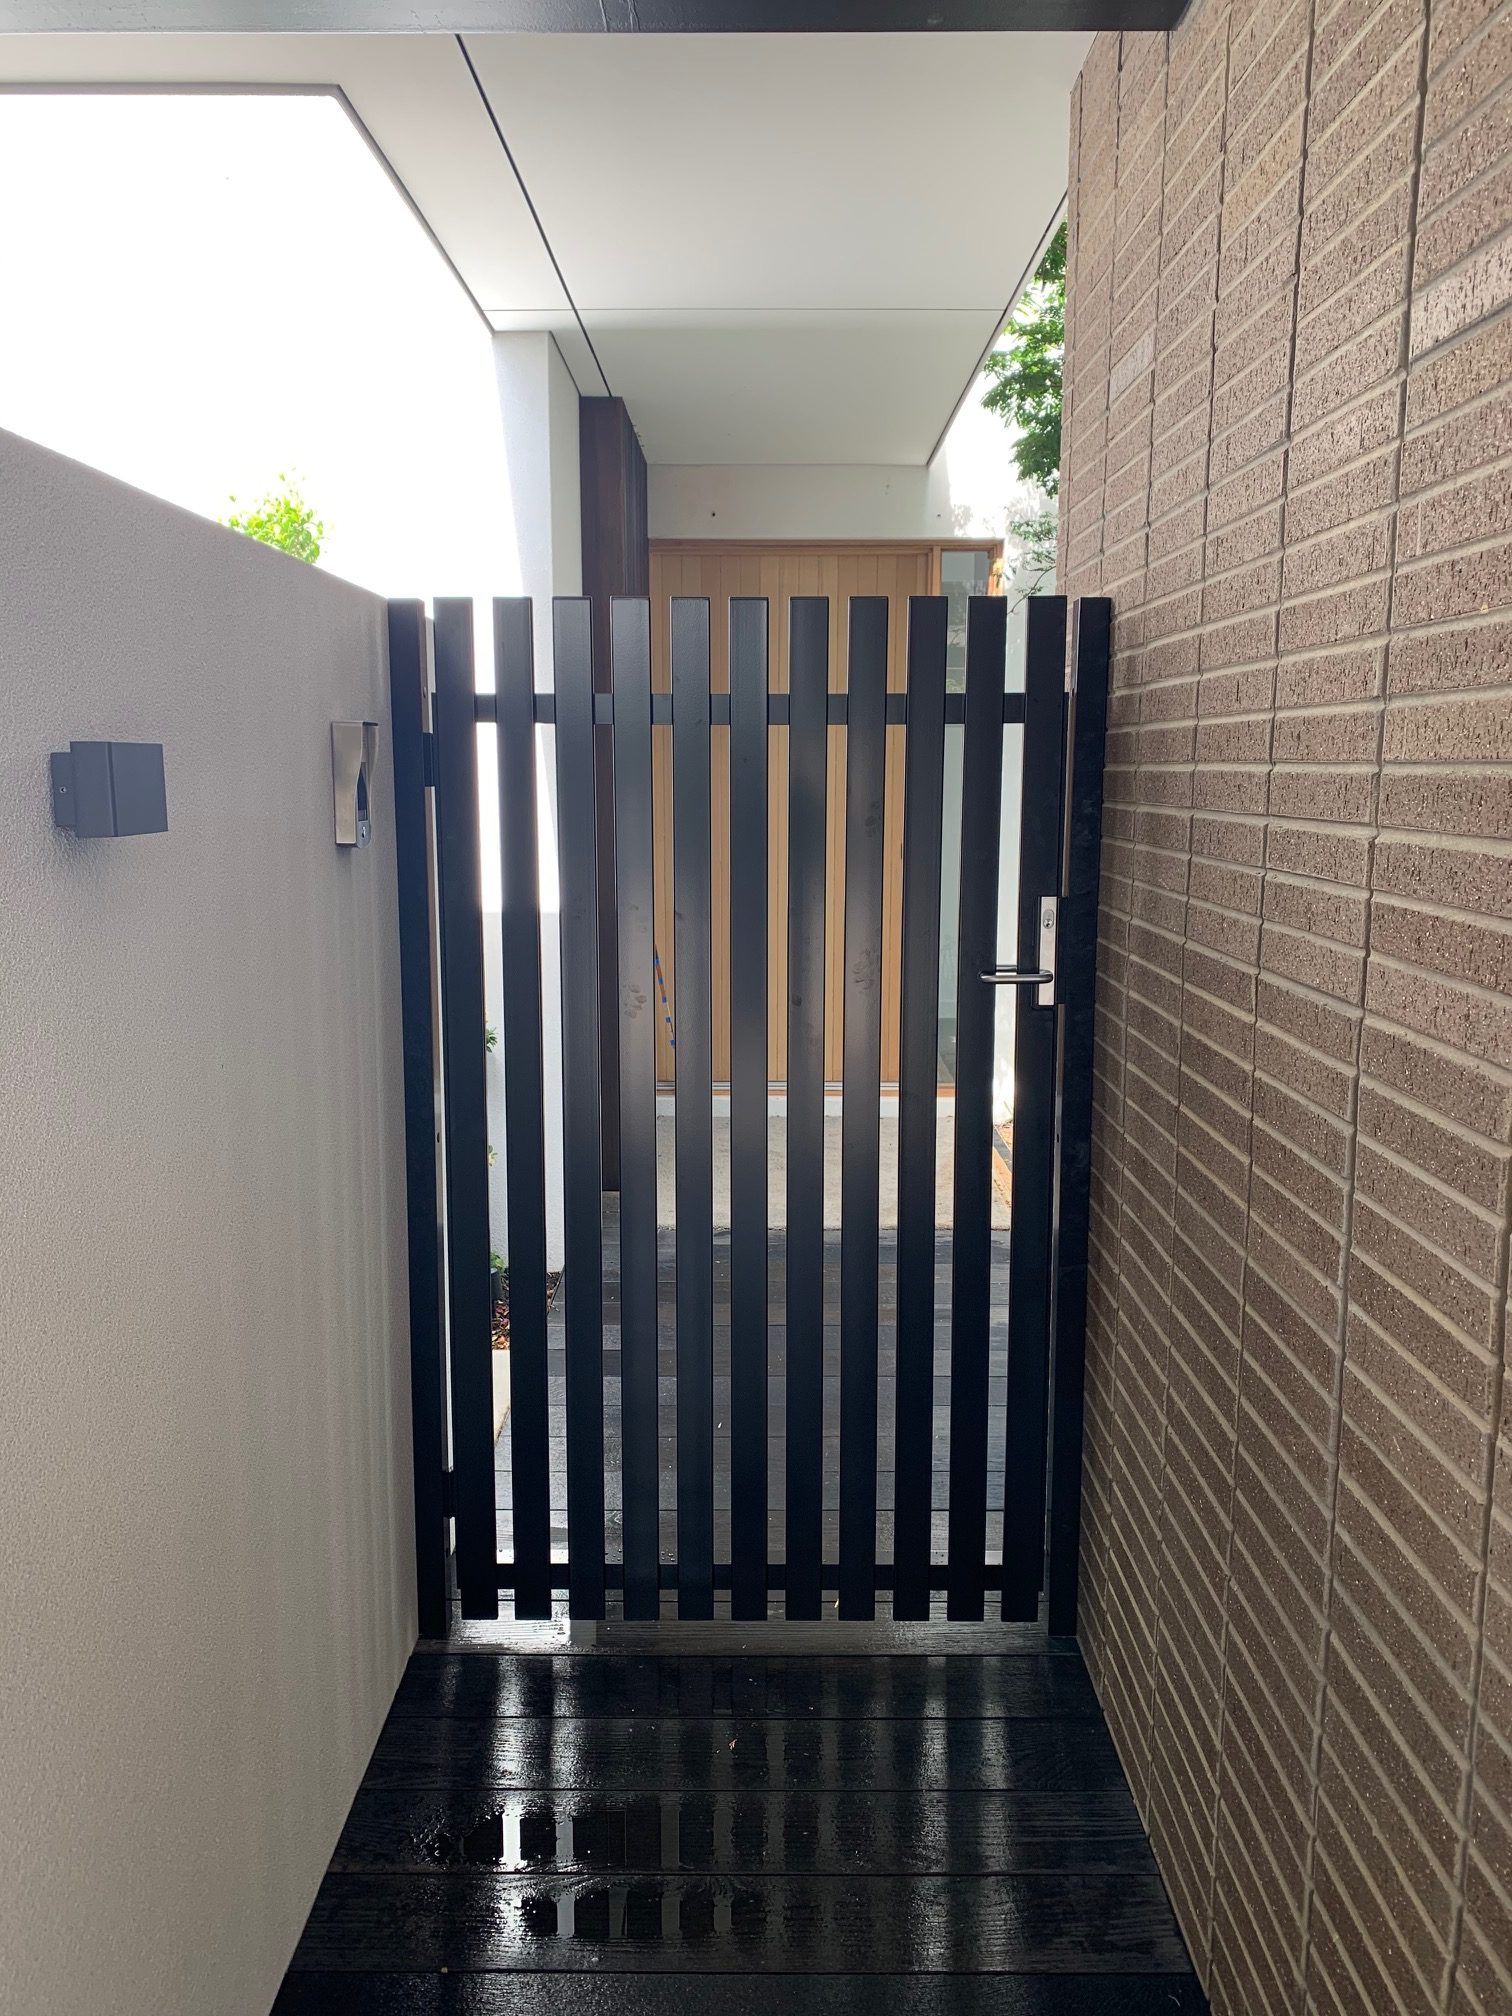 Security Gates in Perth